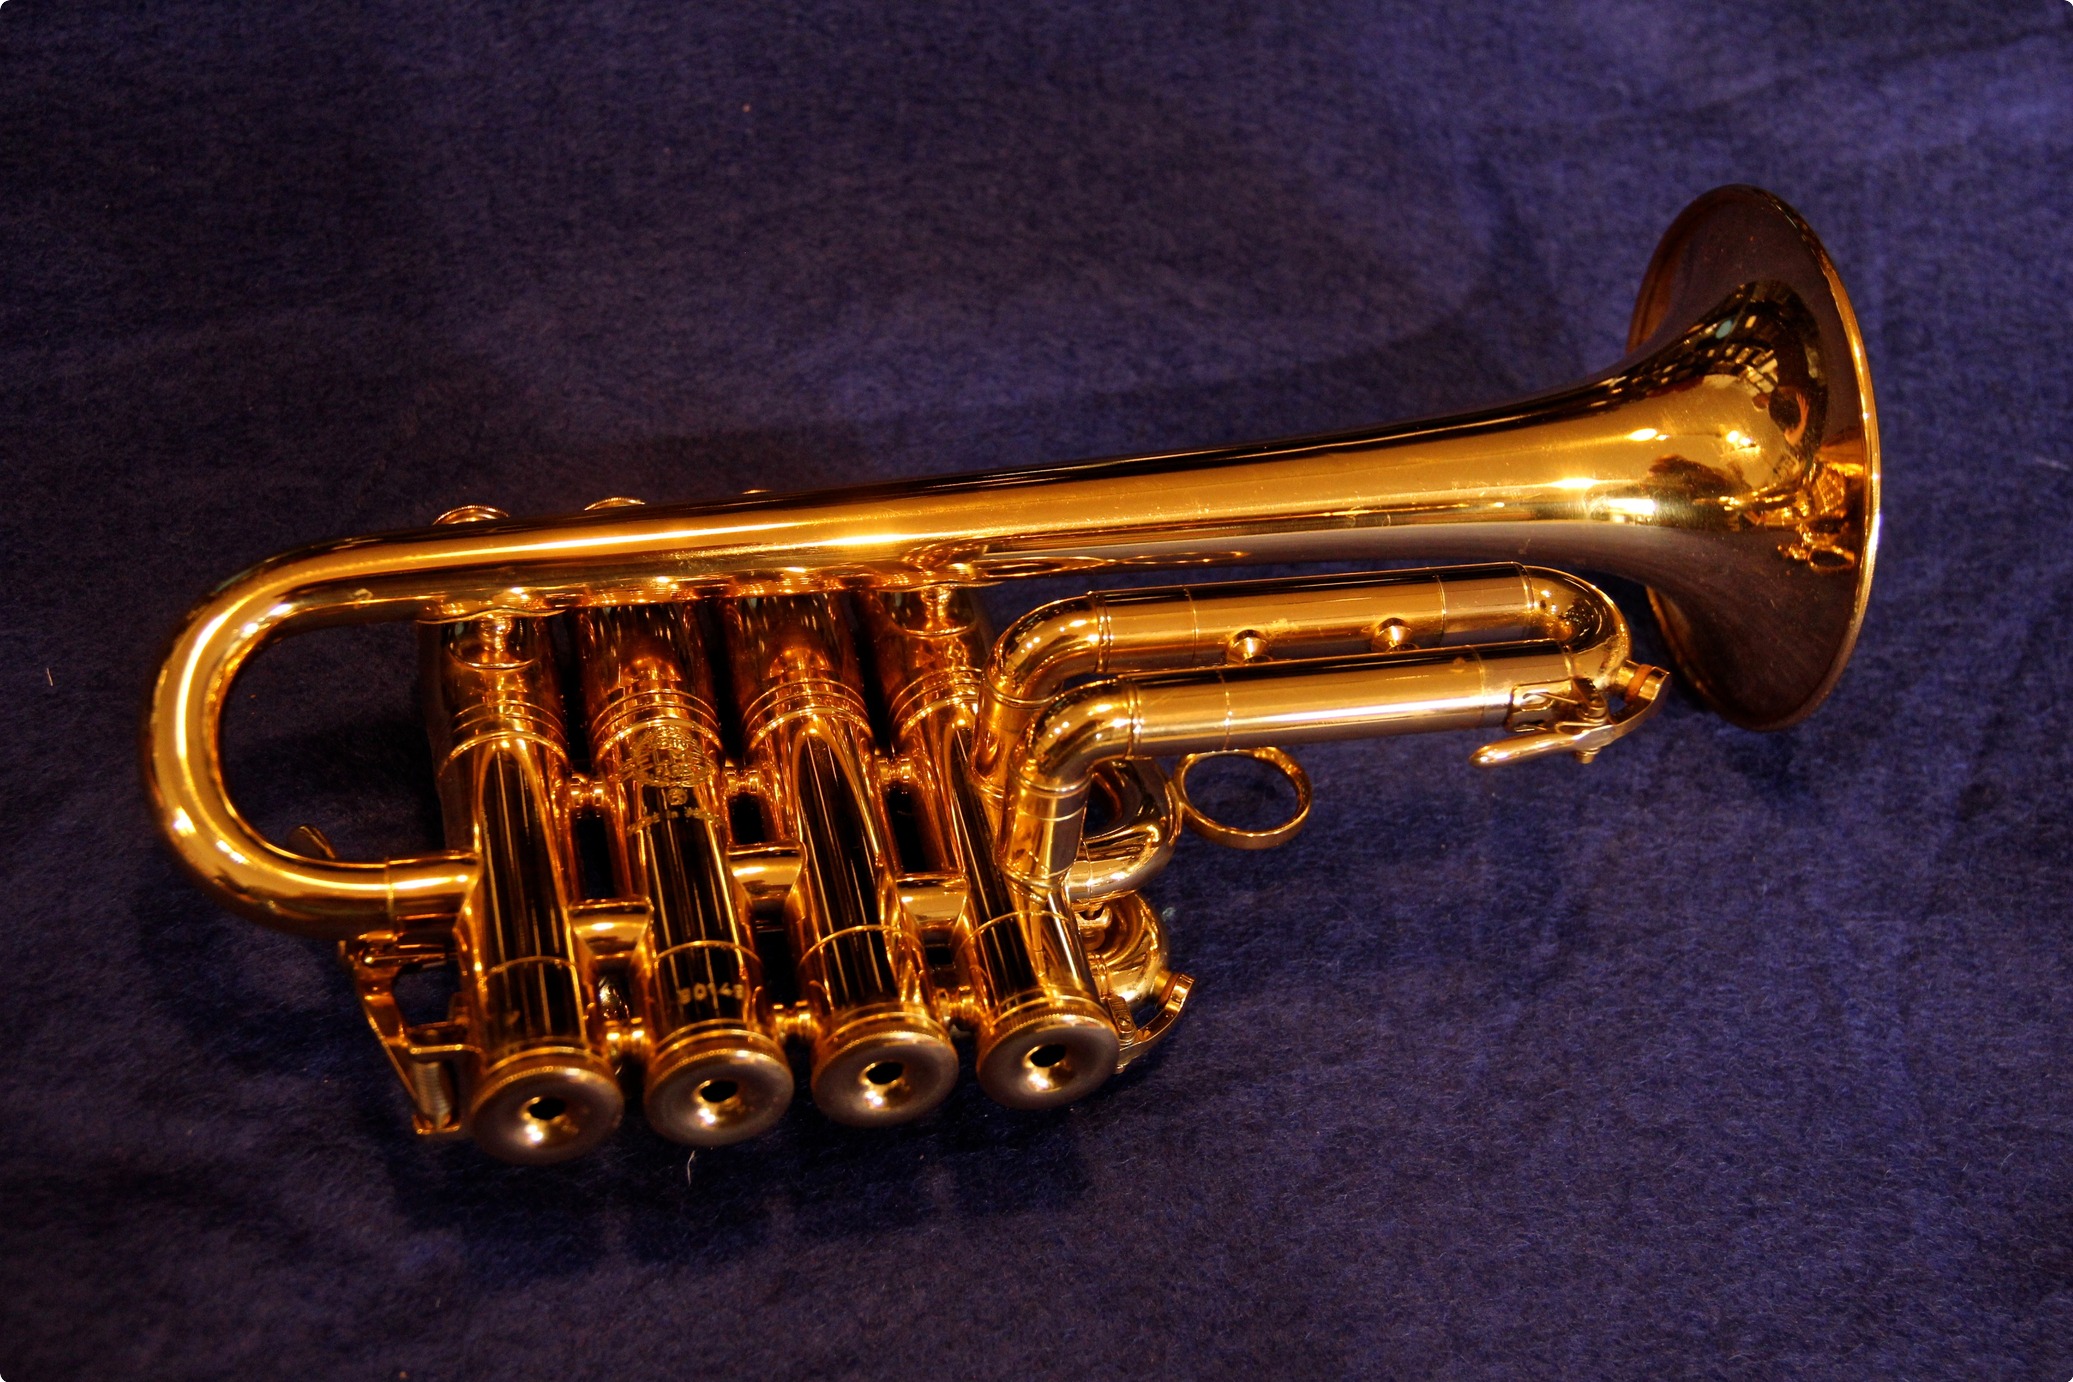 selmer trumpet 89076692